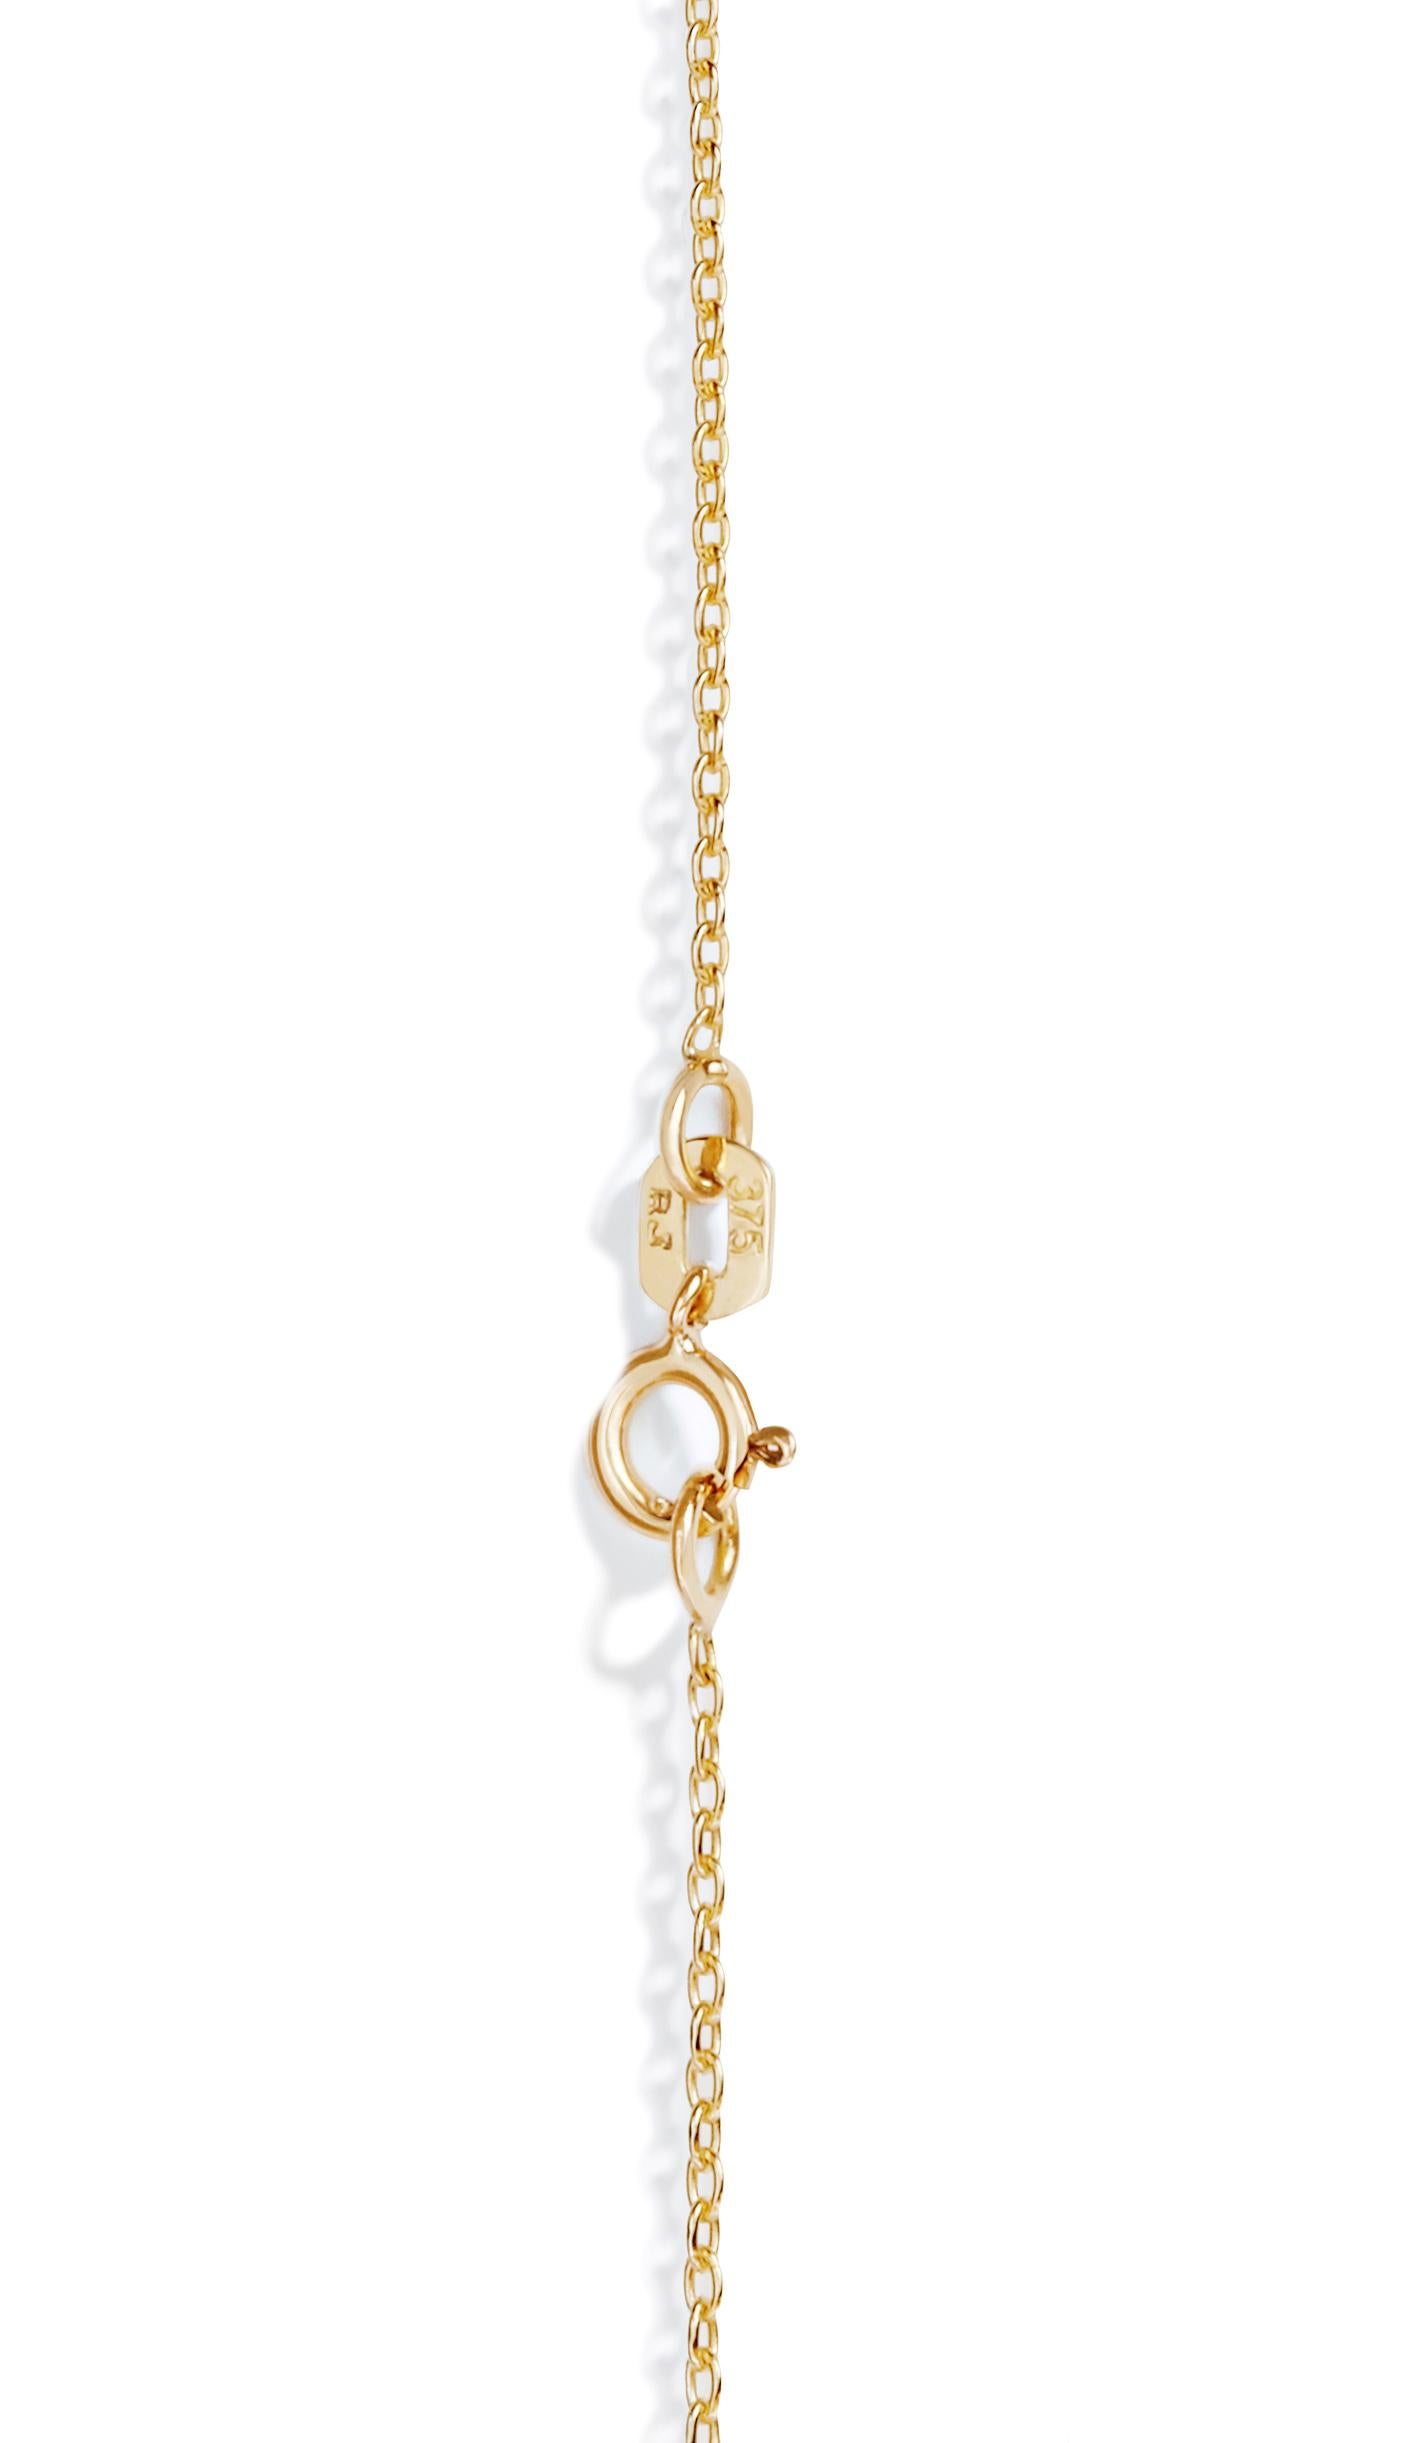 Briolette Cut Opal, Sapphire and 18 Karat Gold Cluster Necklace by Allison Bryan For Sale